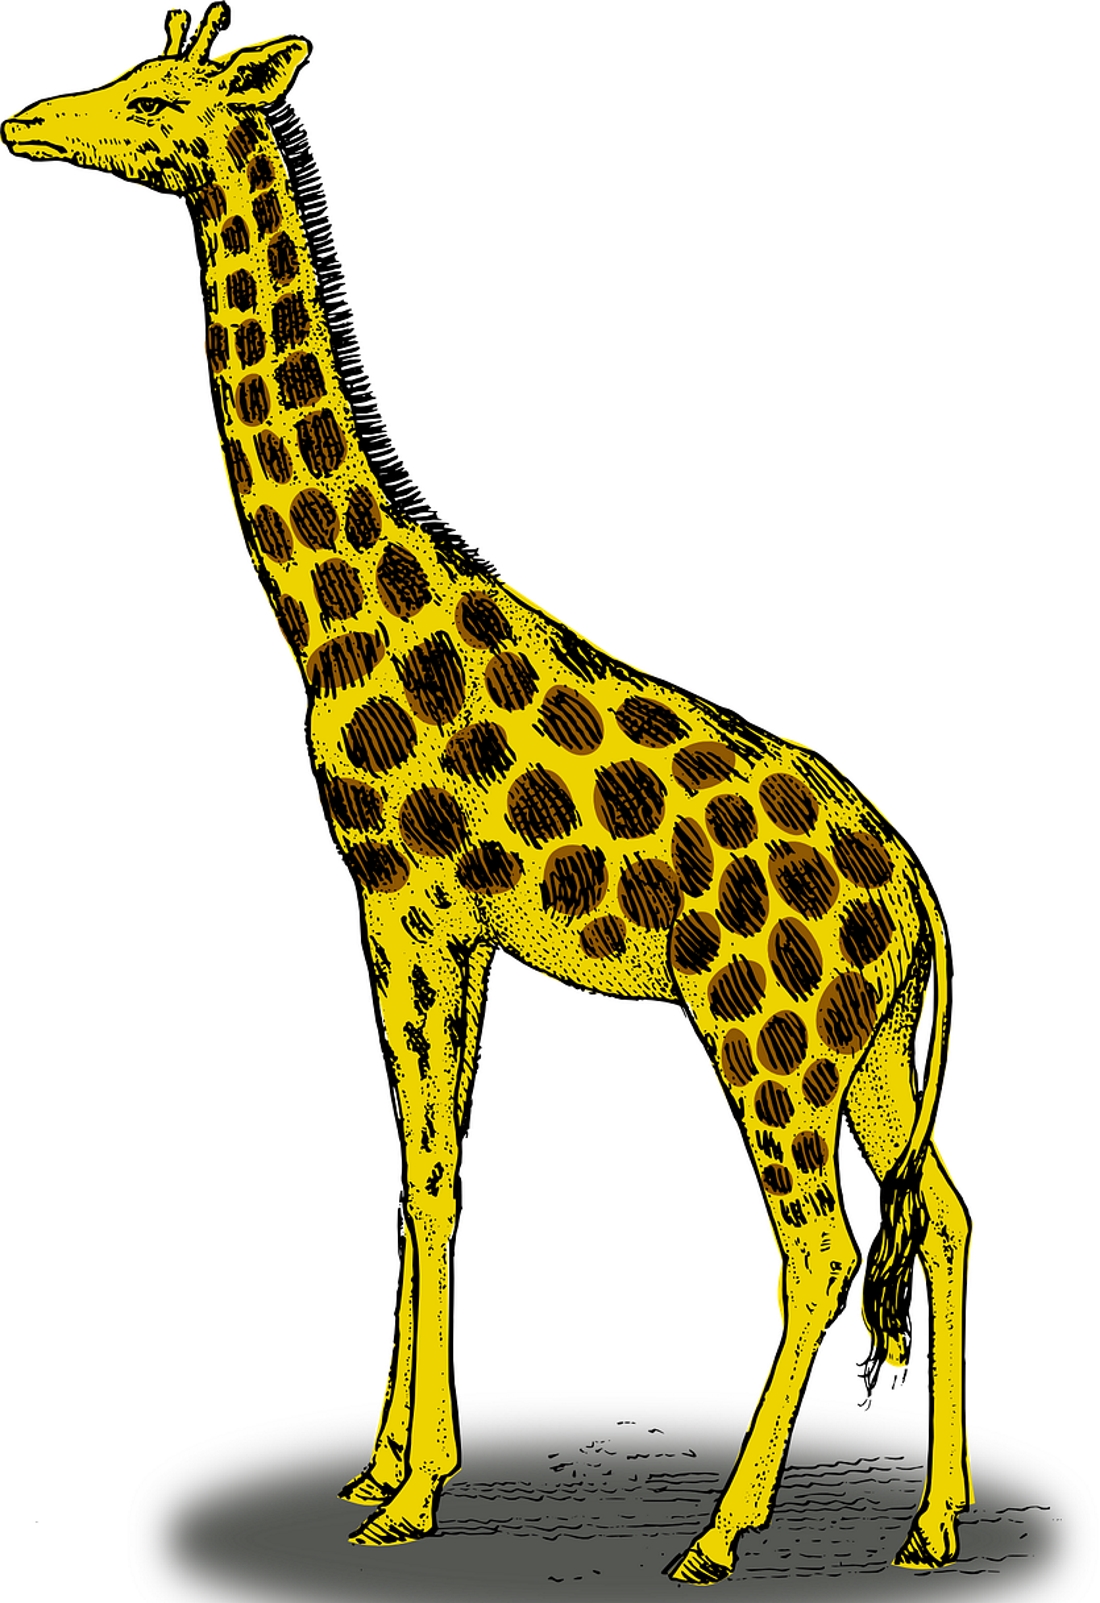 Жираф красивый рисунок на прозрачном фоне